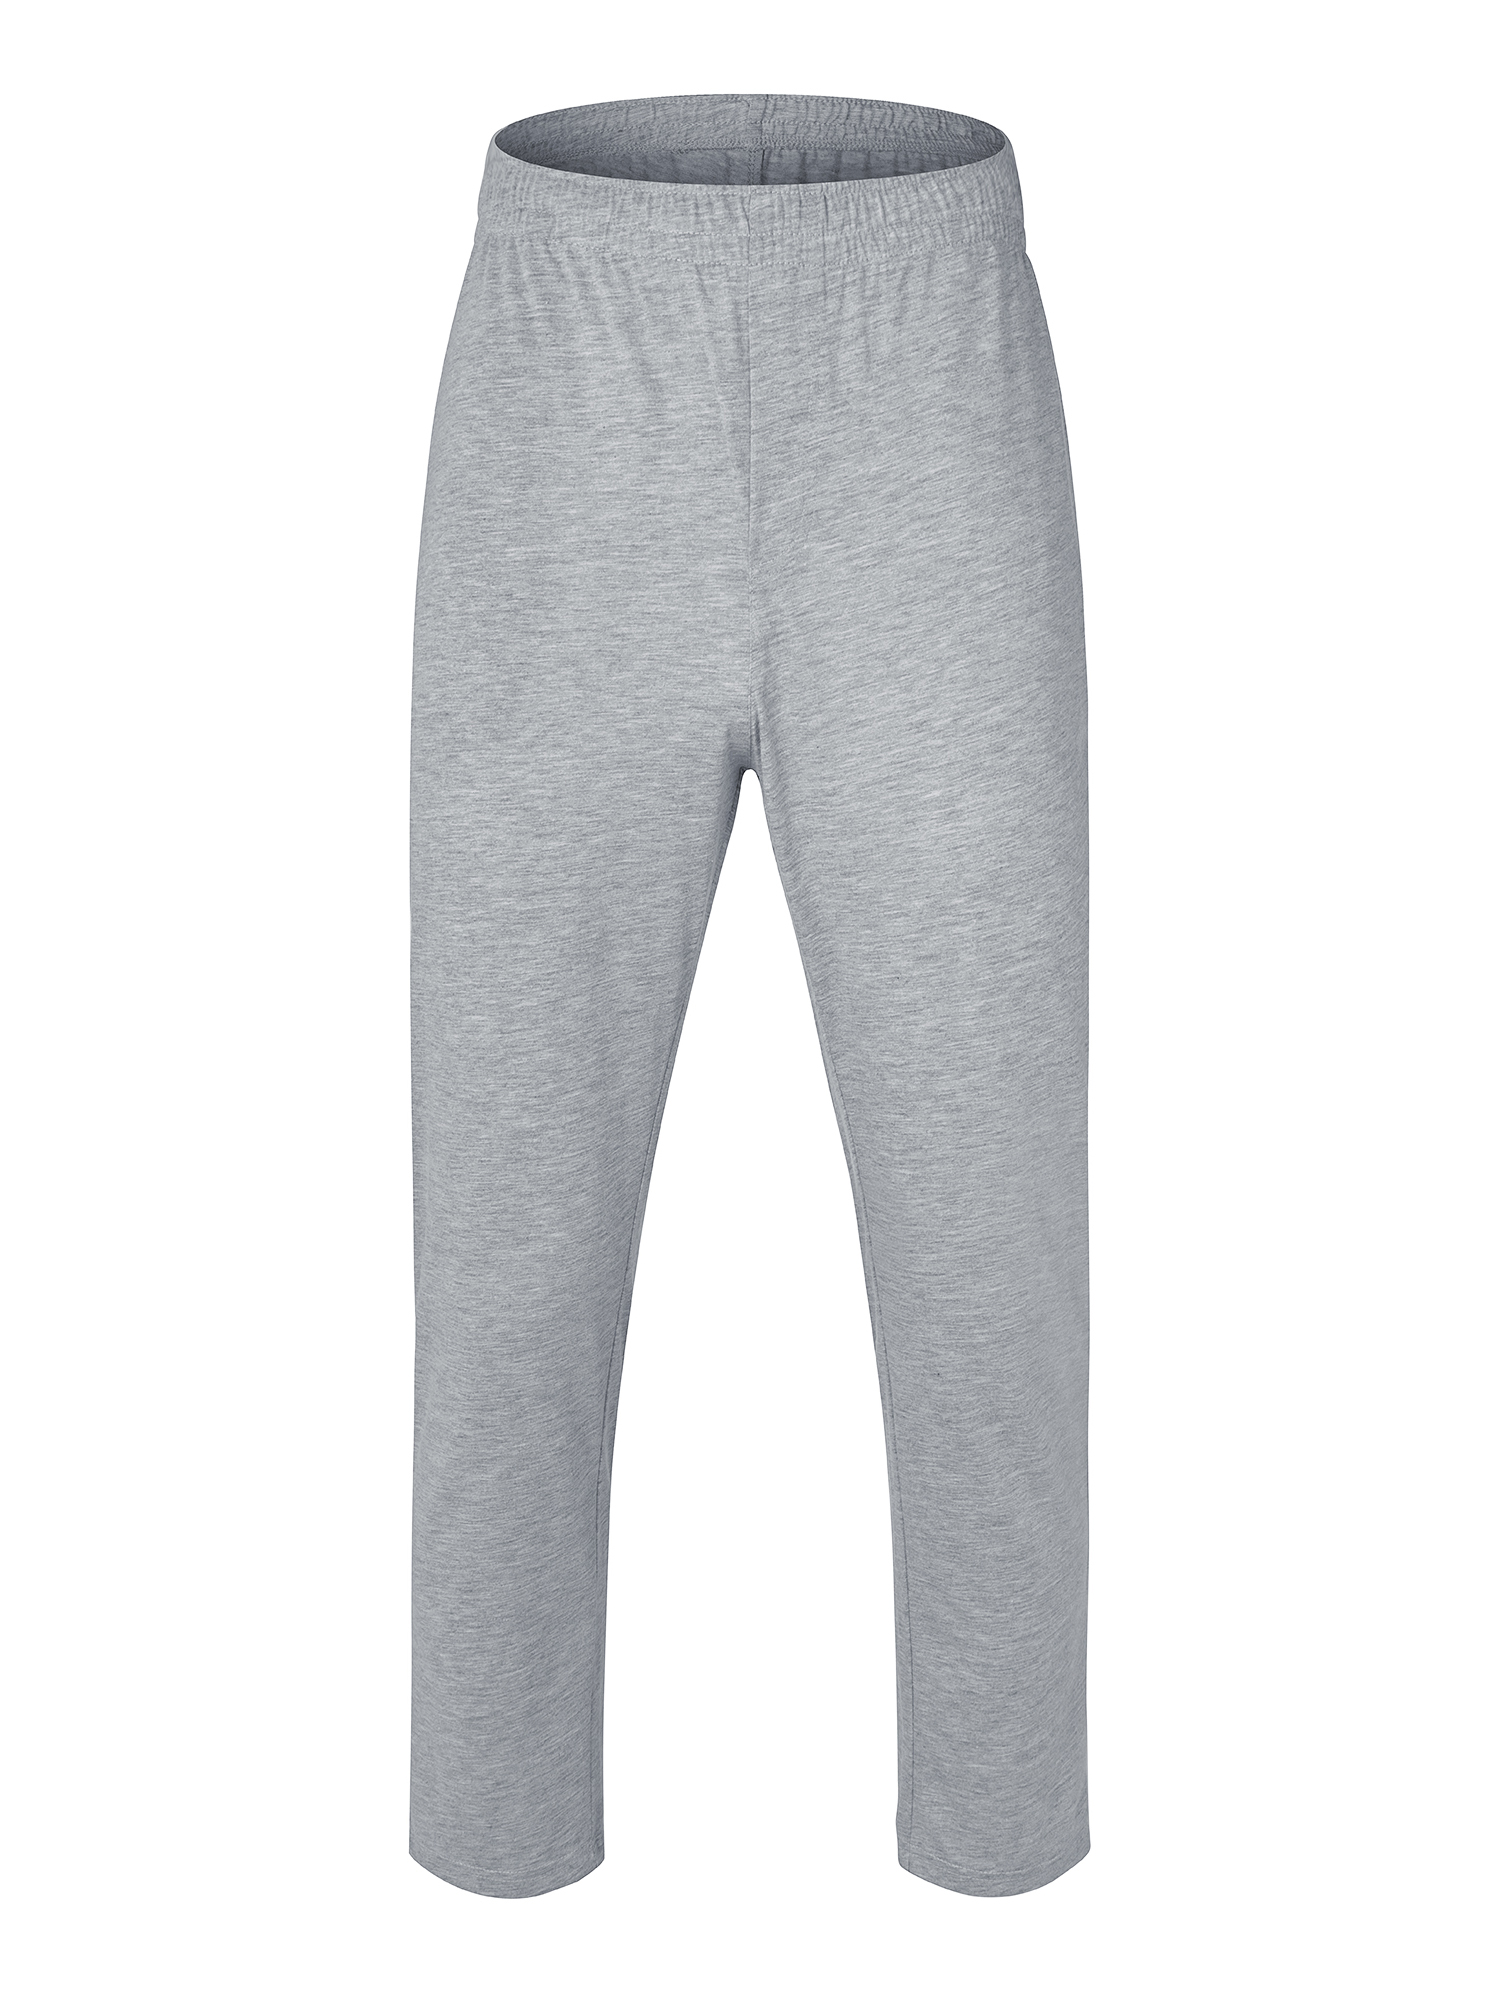 SAYFUT Mens Sleep Pant Sleeping Solid Cotton Pajama Pant Sleepwear for ...